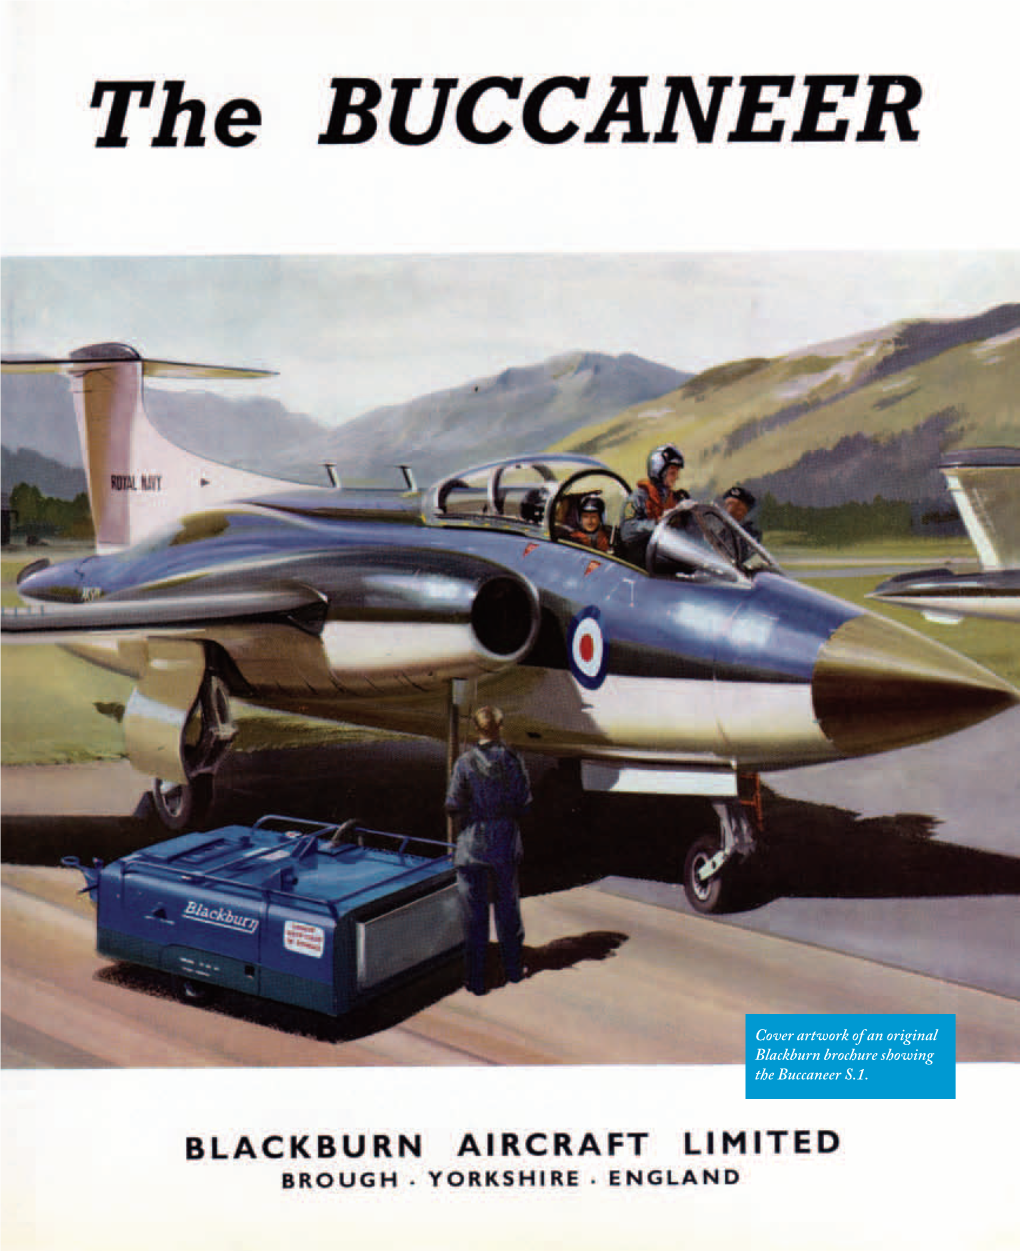 Cover Artwork of an Original Blackburn Brochure Showing the Buccaneer S.1